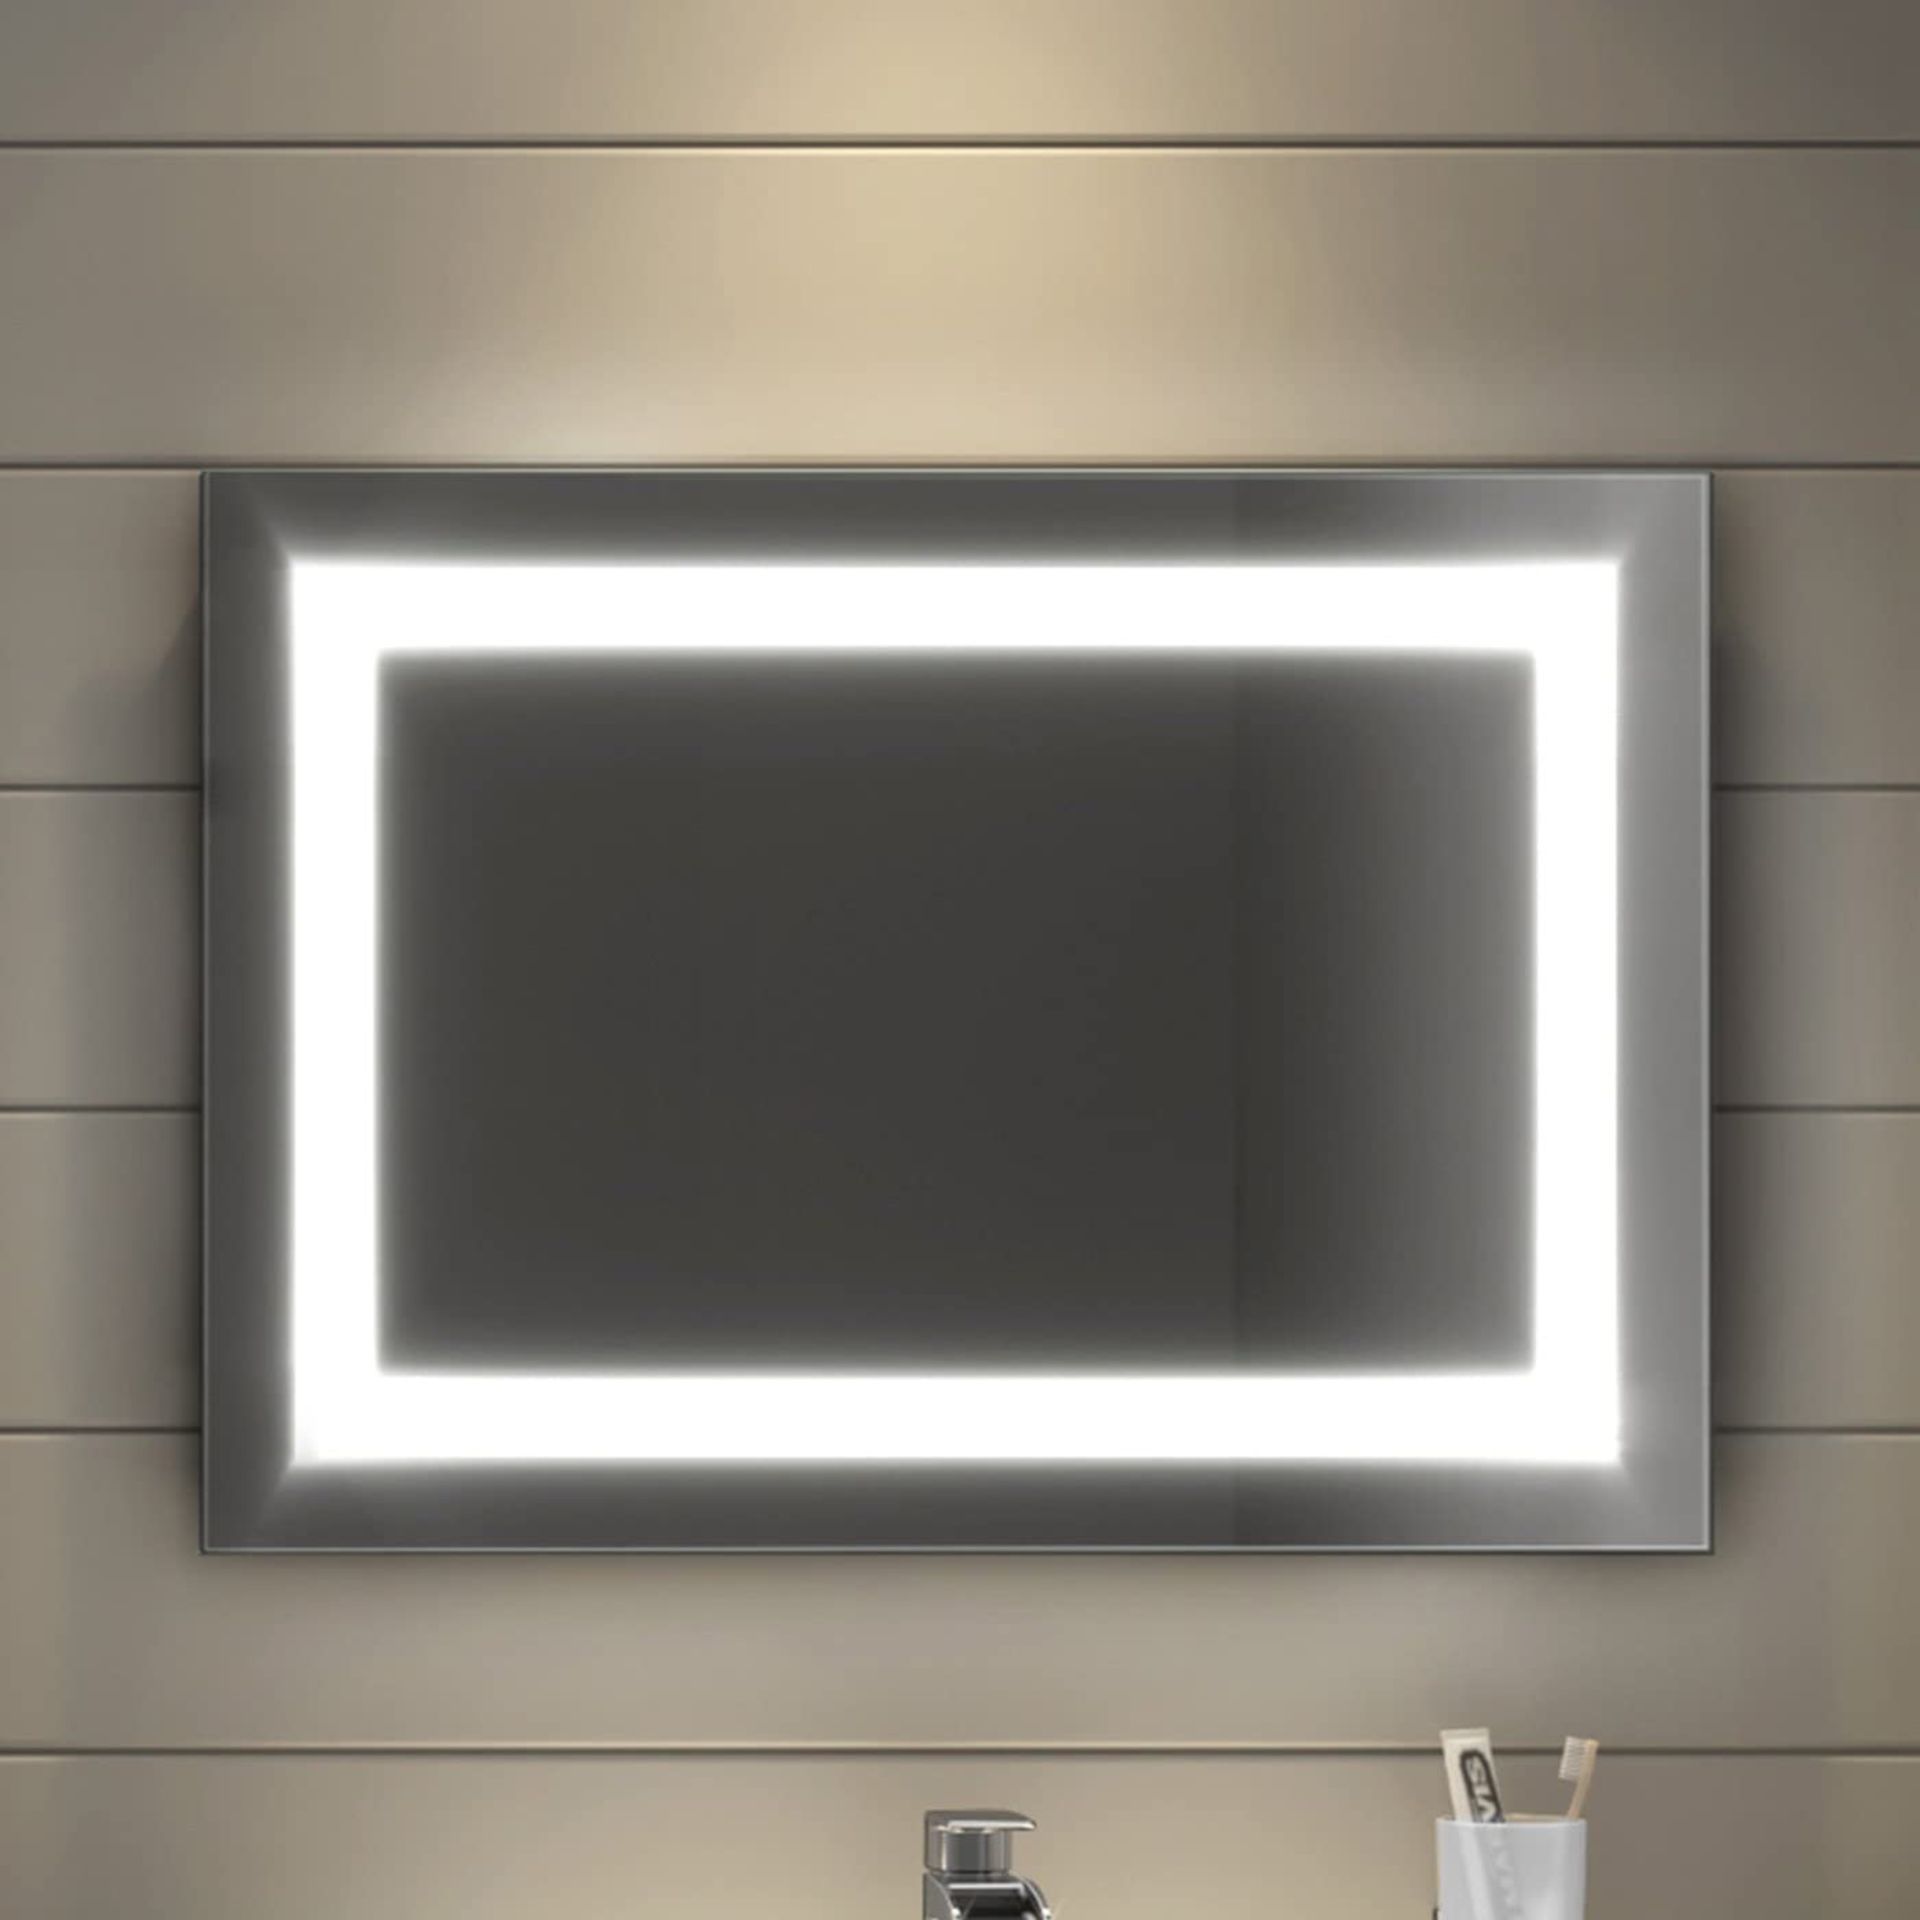 NEW 500x700mm Modern Illuminated Backlit LED Light Bathroom Mirror + Demister Pad. RRP £599.99. - Image 2 of 2